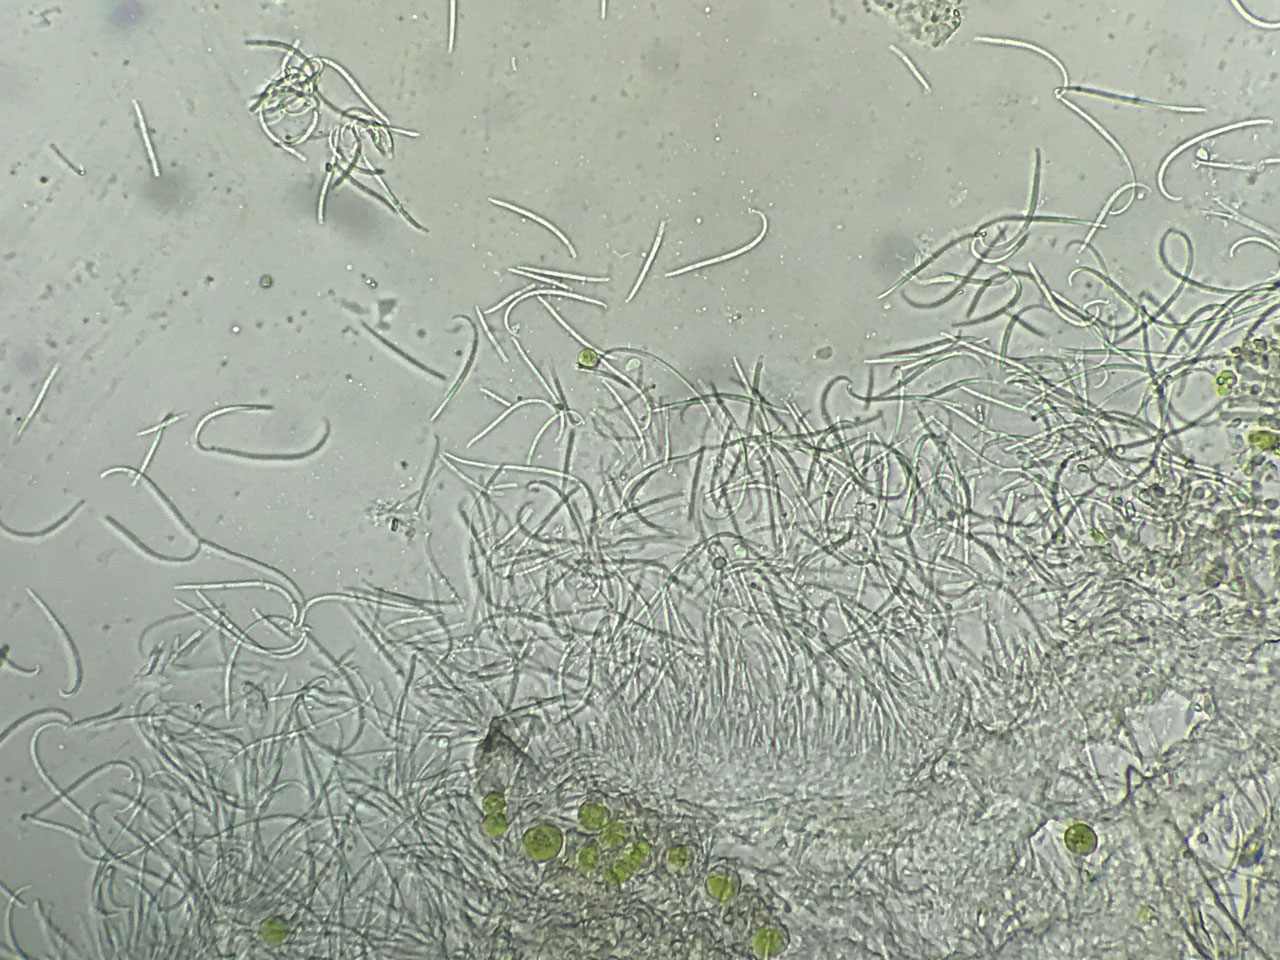 Bacidina celtica (Bacidina squamellosa), conidia, Sallow, Sticknage Wood, New Forest